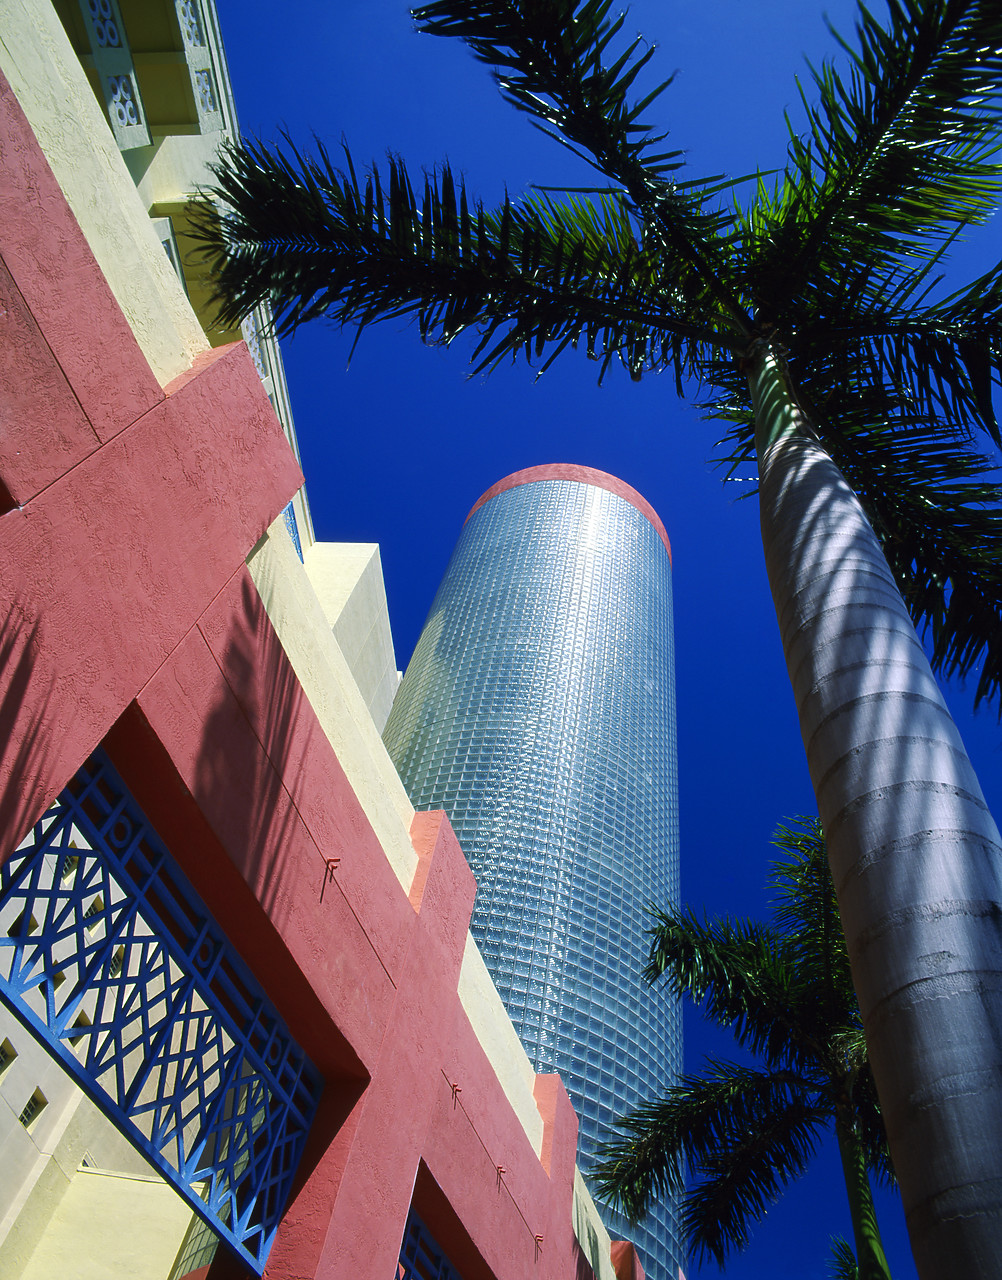 #010186-1 - Art Deco Building & Palm Tree, Miami, Florida, USA